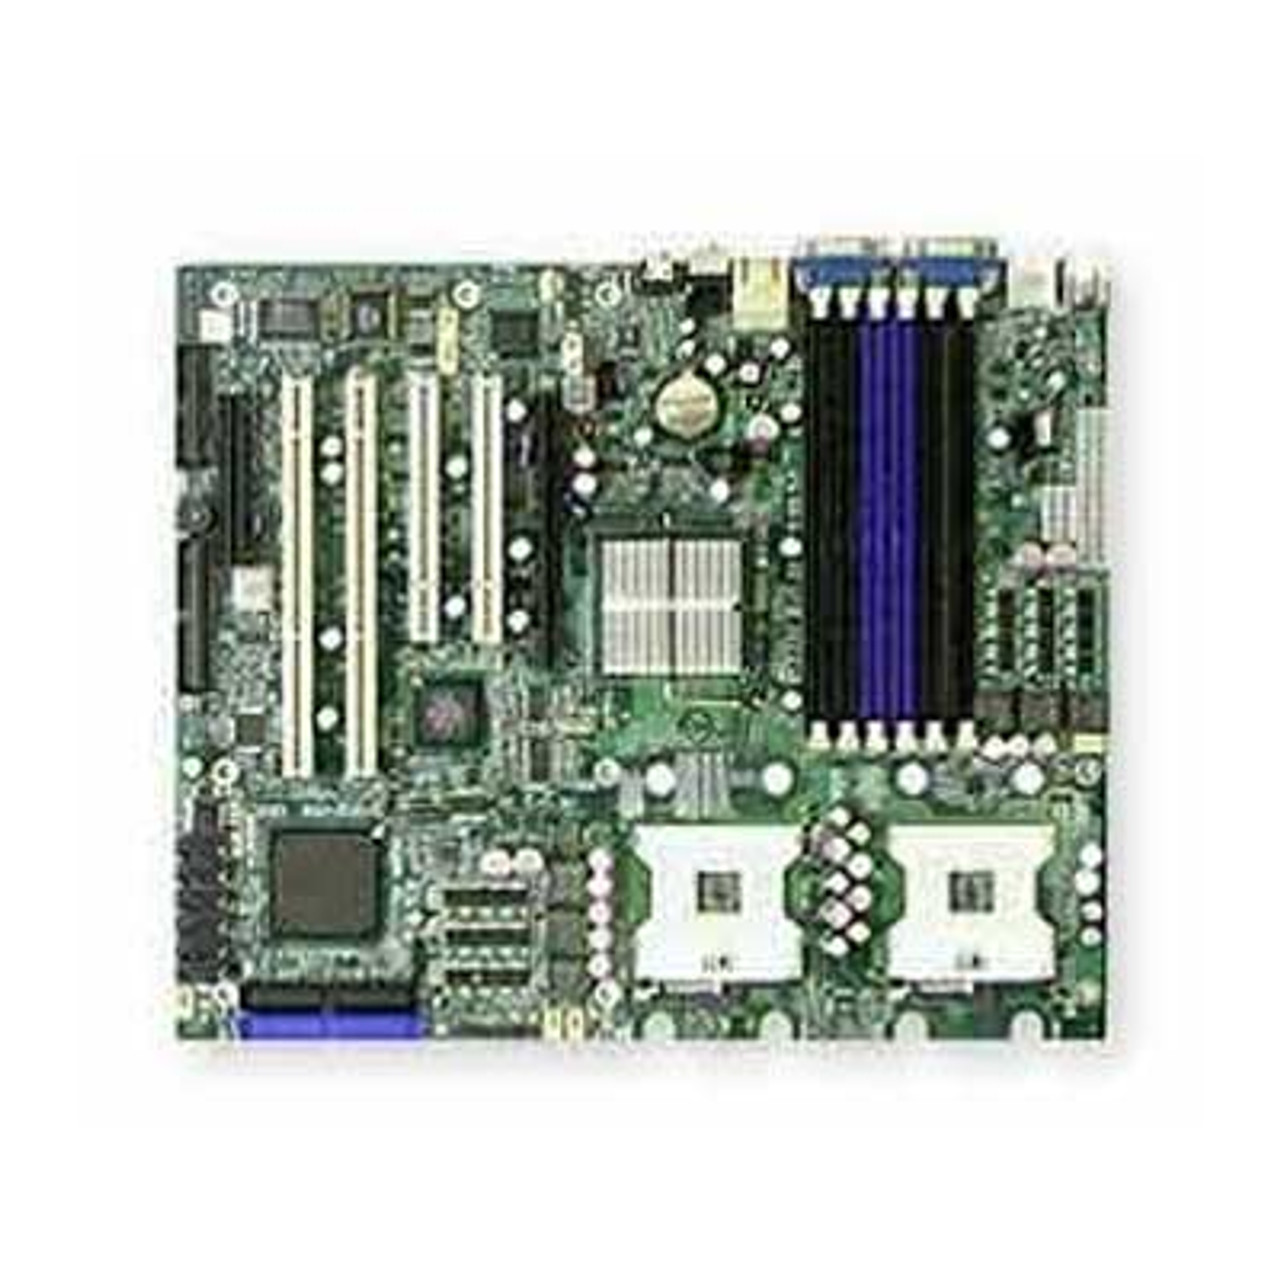 X6DAL-TG-O SuperMicro X6DAL-TG Socket 604 Intel E7525 (Tumwater) Chipset ATX Server Motherboard (Refurbished)